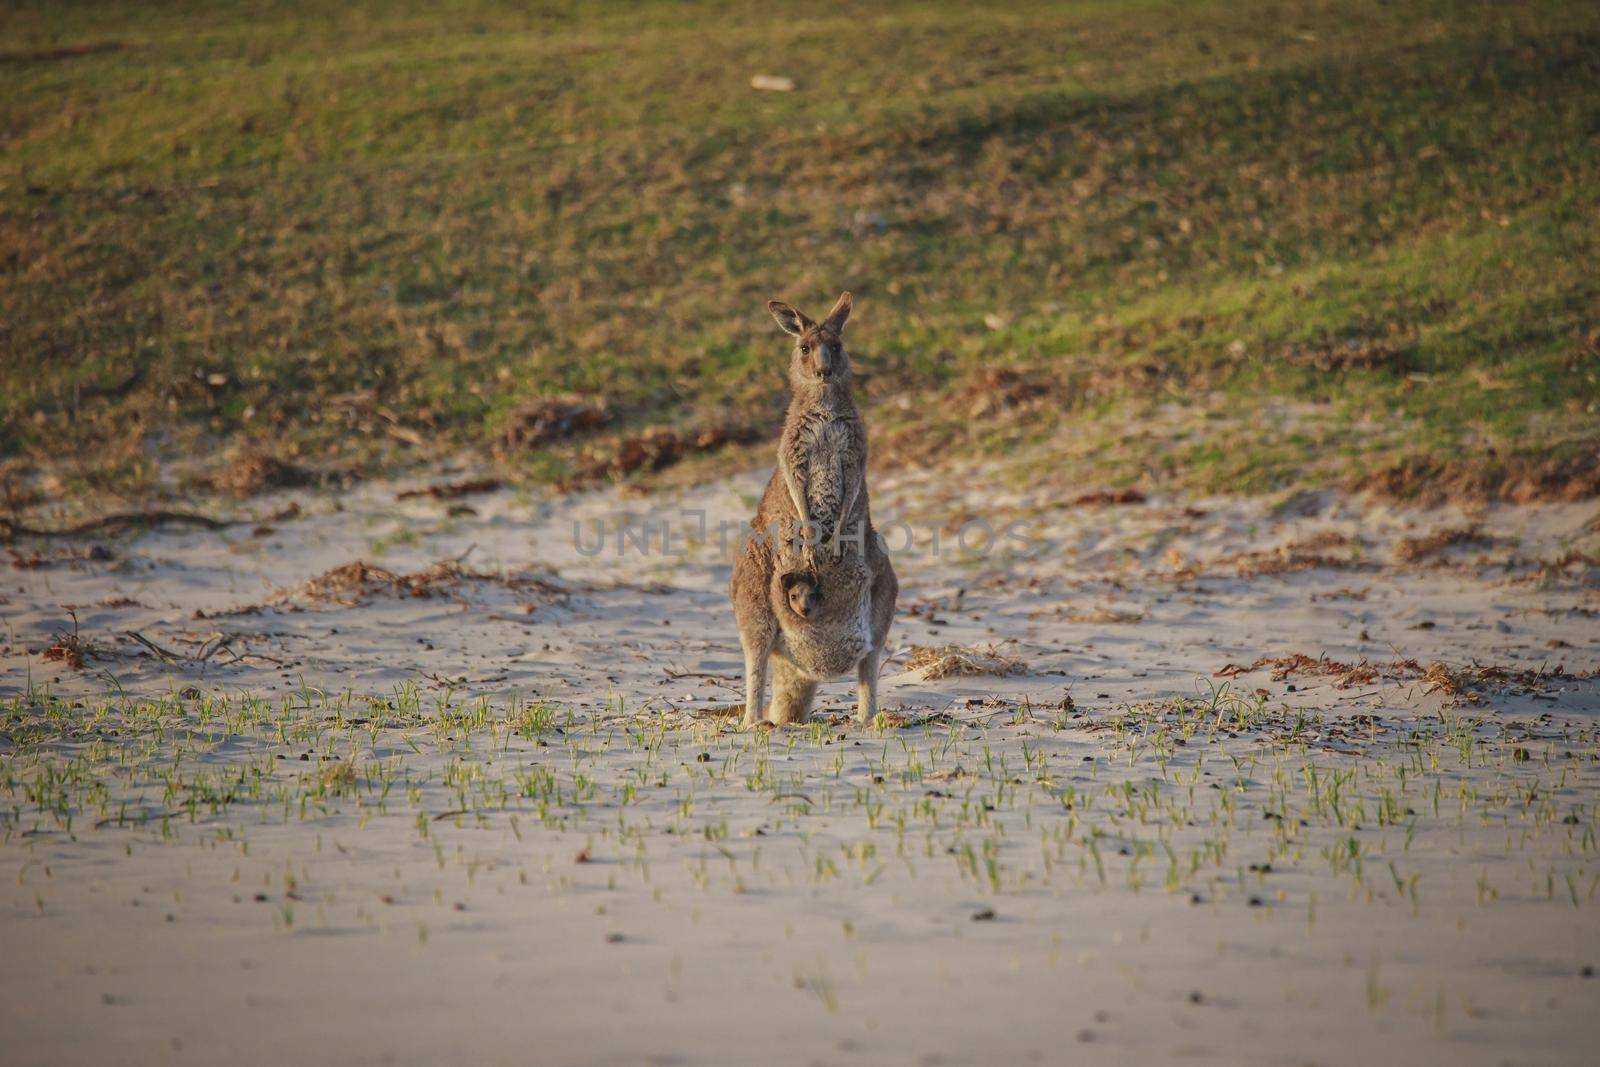 Female Eastern Grey Kangaroo with her Joey. High quality photo